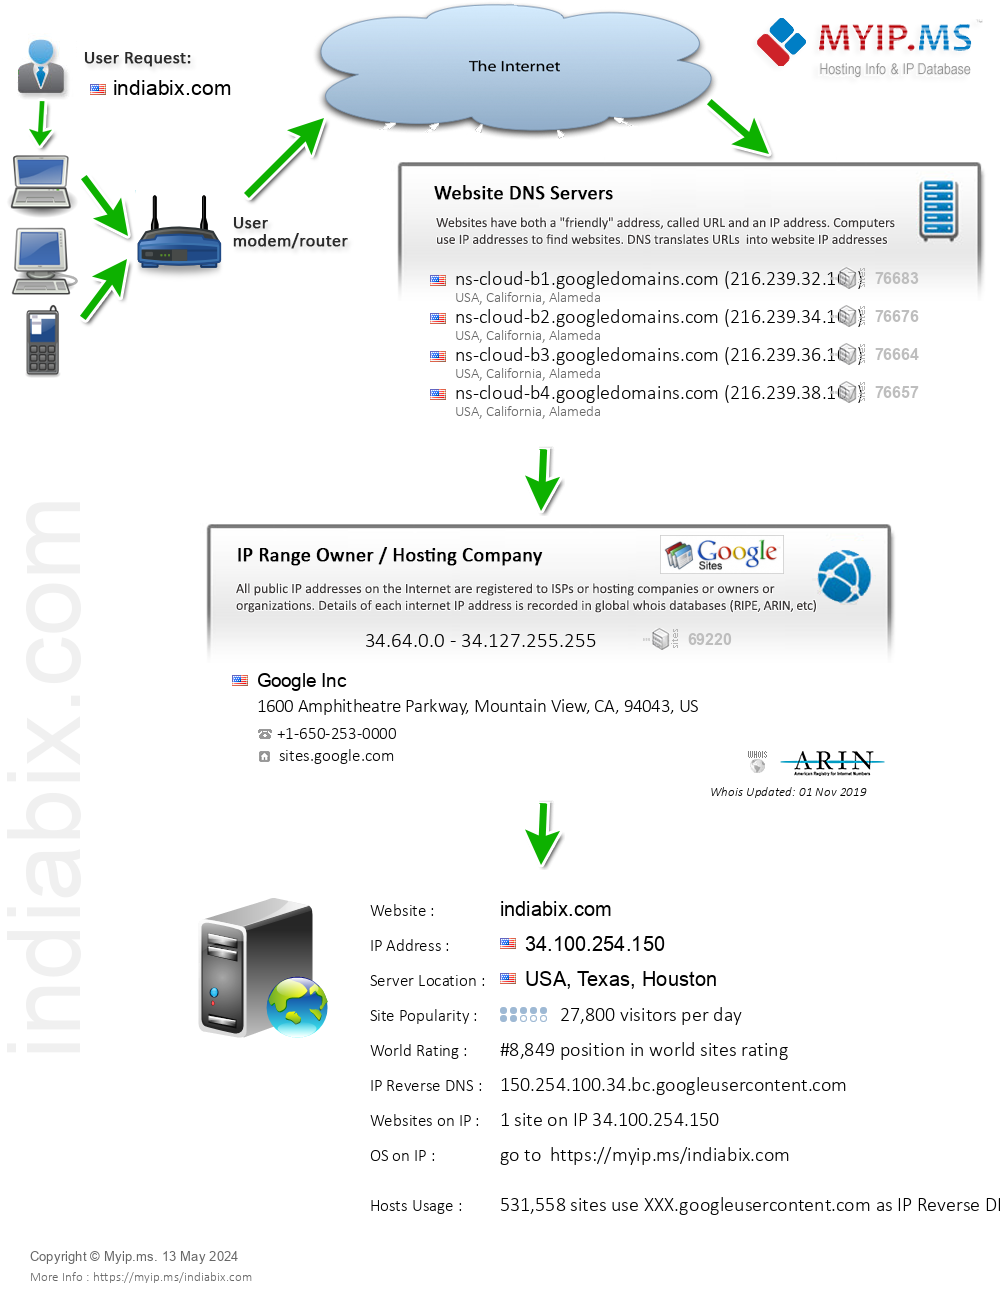 Indiabix.com - Website Hosting Visual IP Diagram